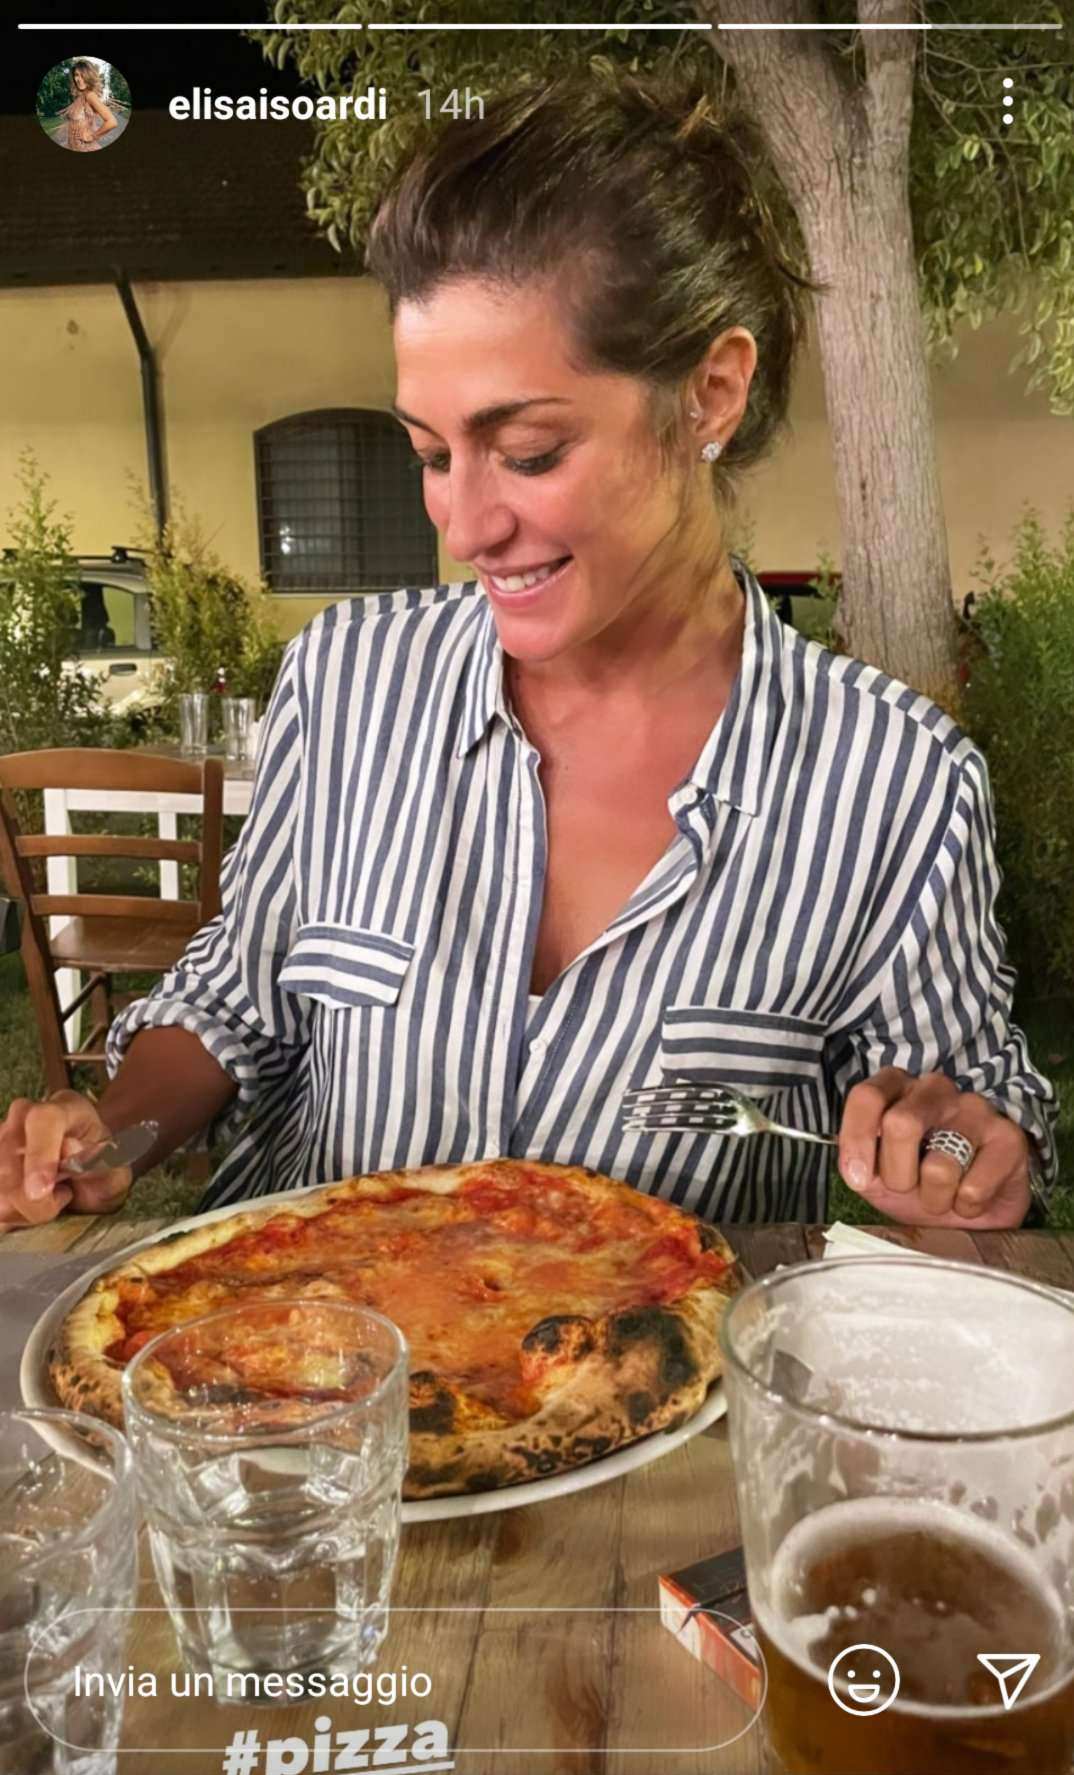 Elisa Isoardi - pizza